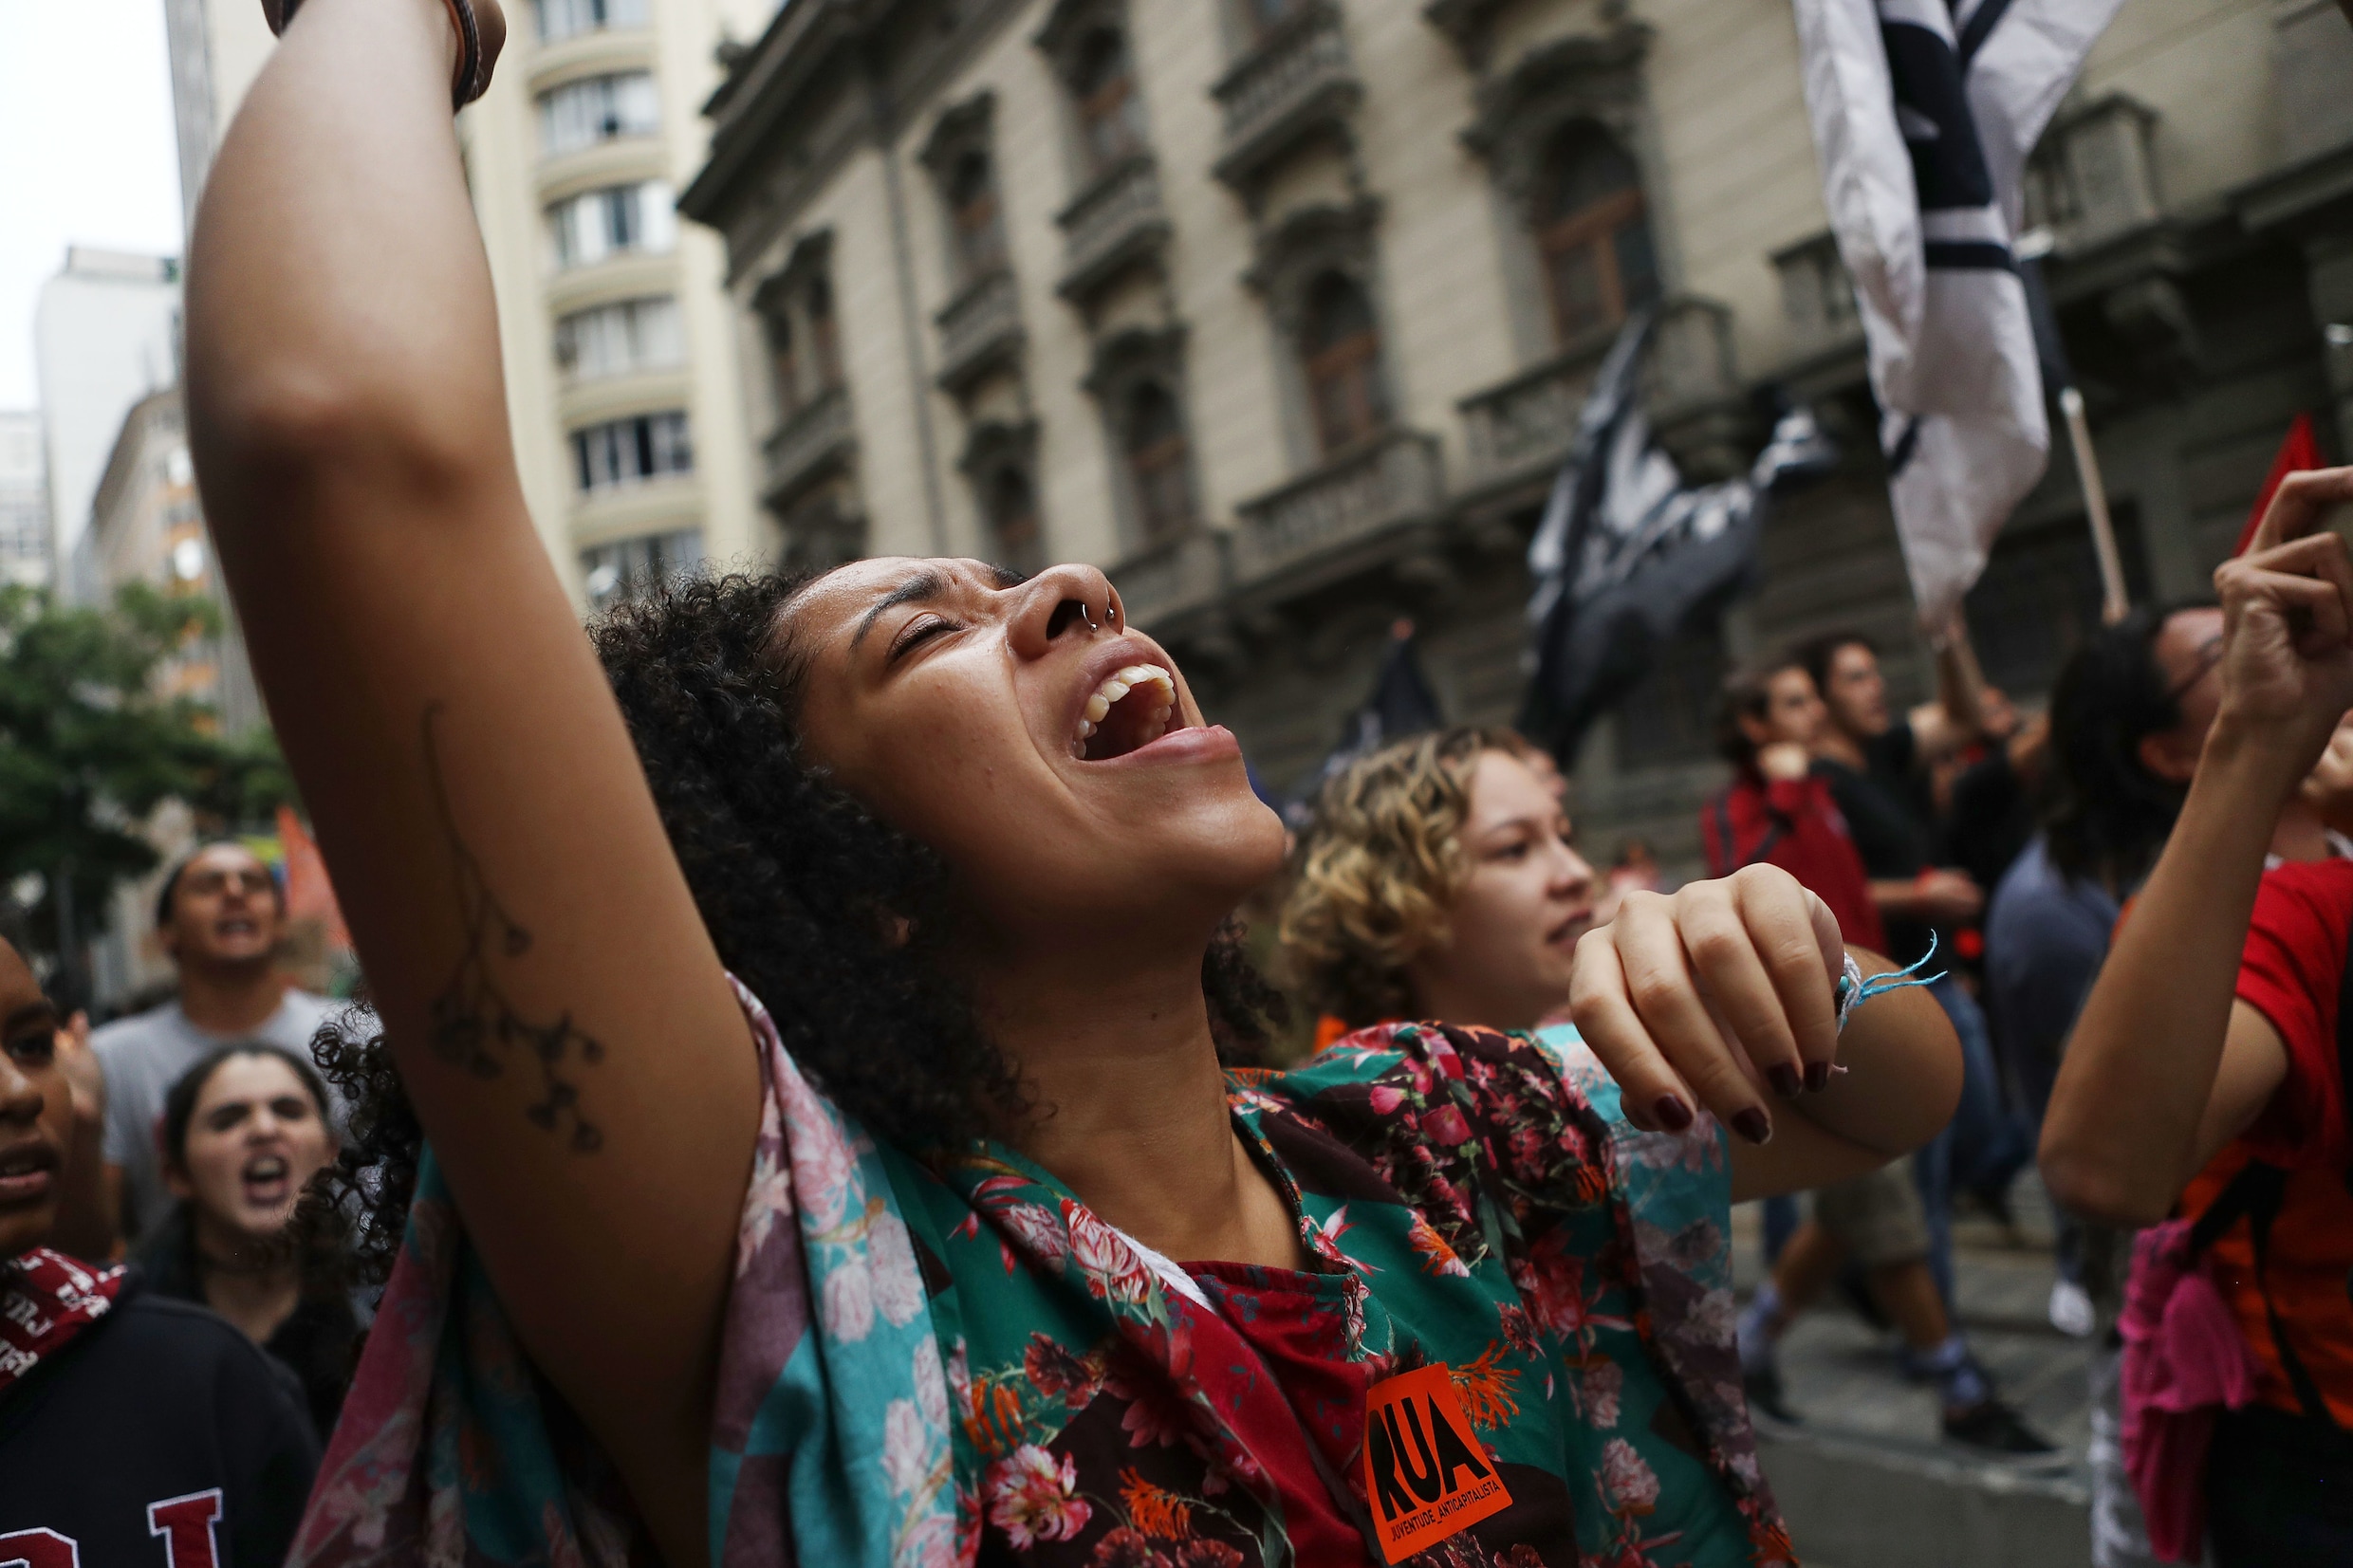 Hevige rellen bij massaprotesten tegen plannen president in Brazilië